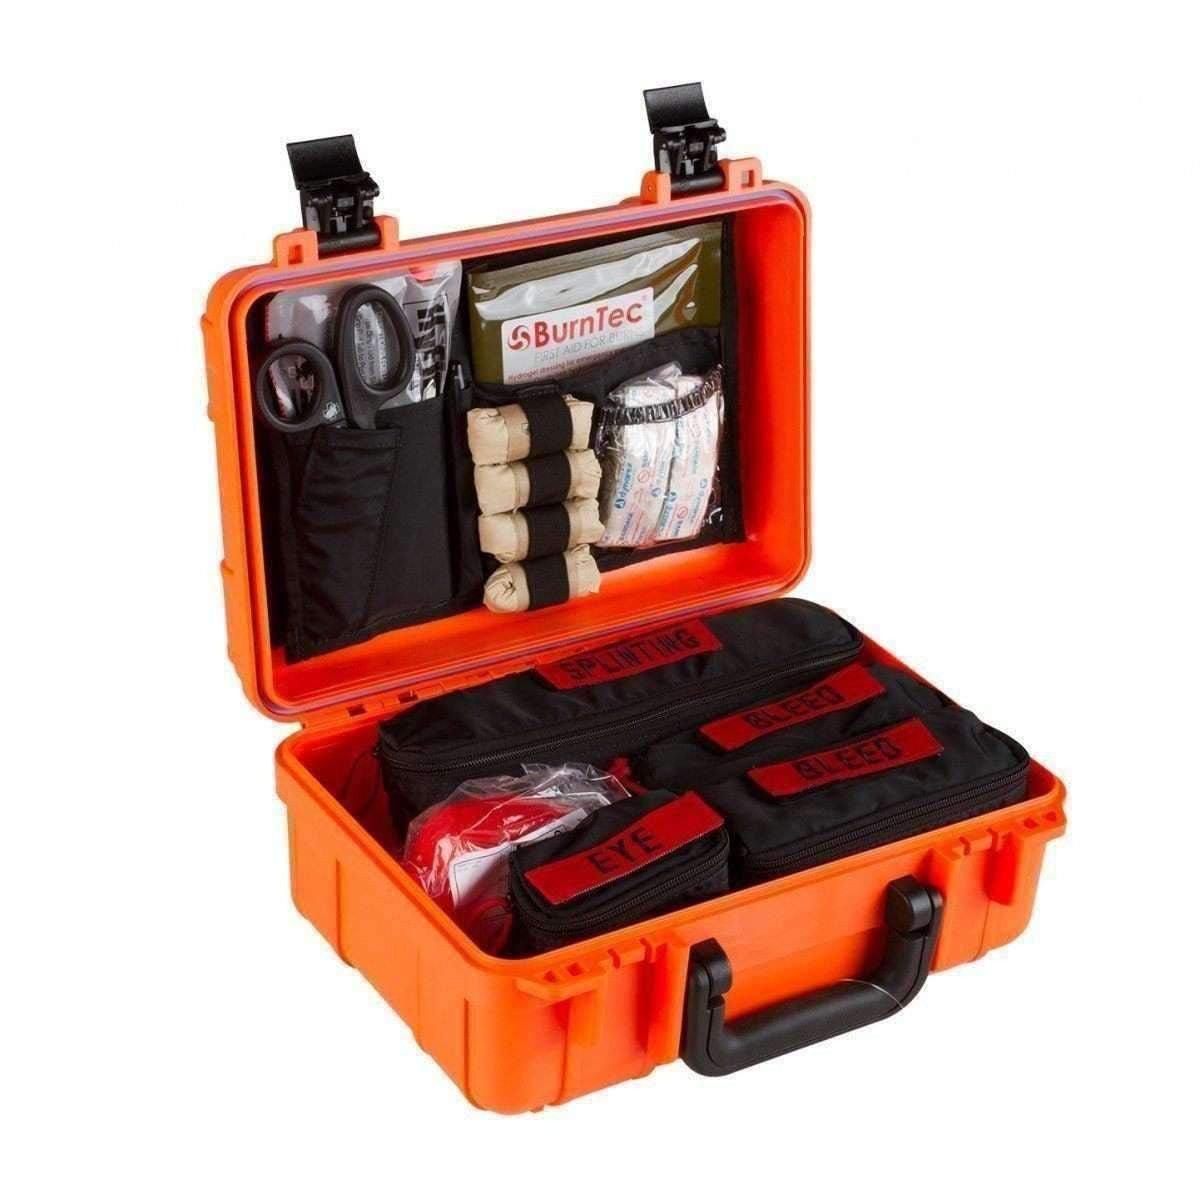 Range Trauma Kit - HARD CASE - Vendor